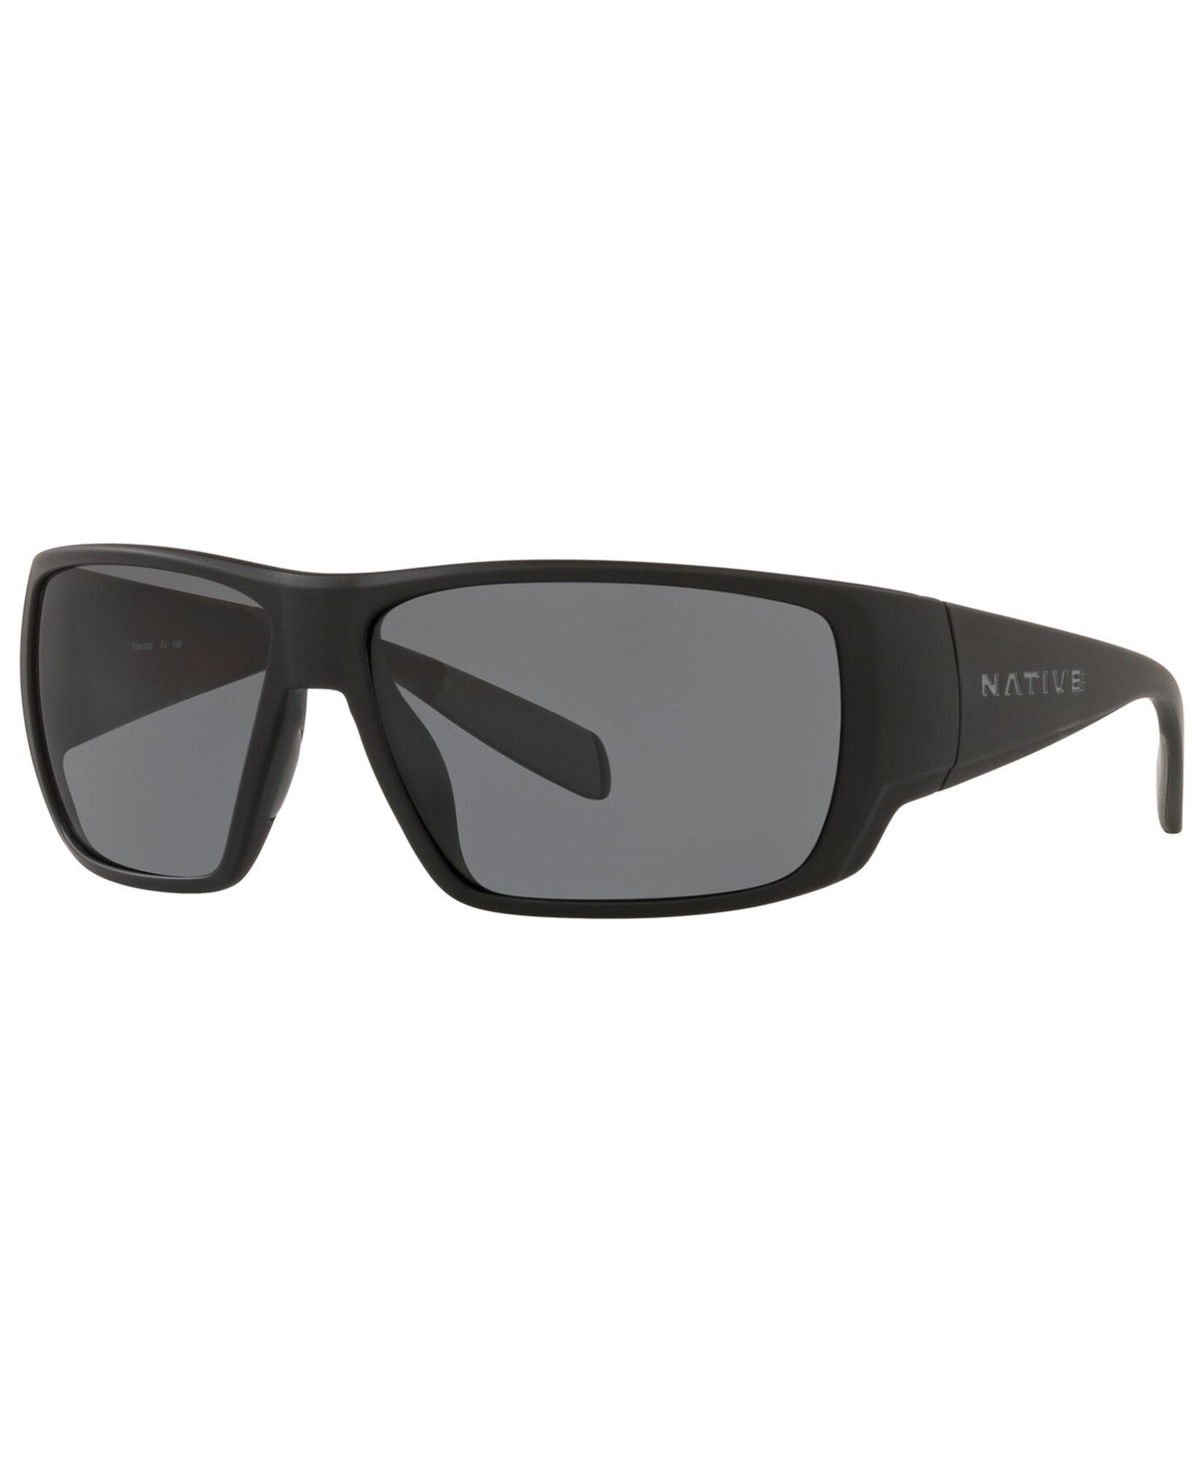 Native Eyewear Native Men's Polarized Sunglasses, Xd0061 64 In Matte Black,grey